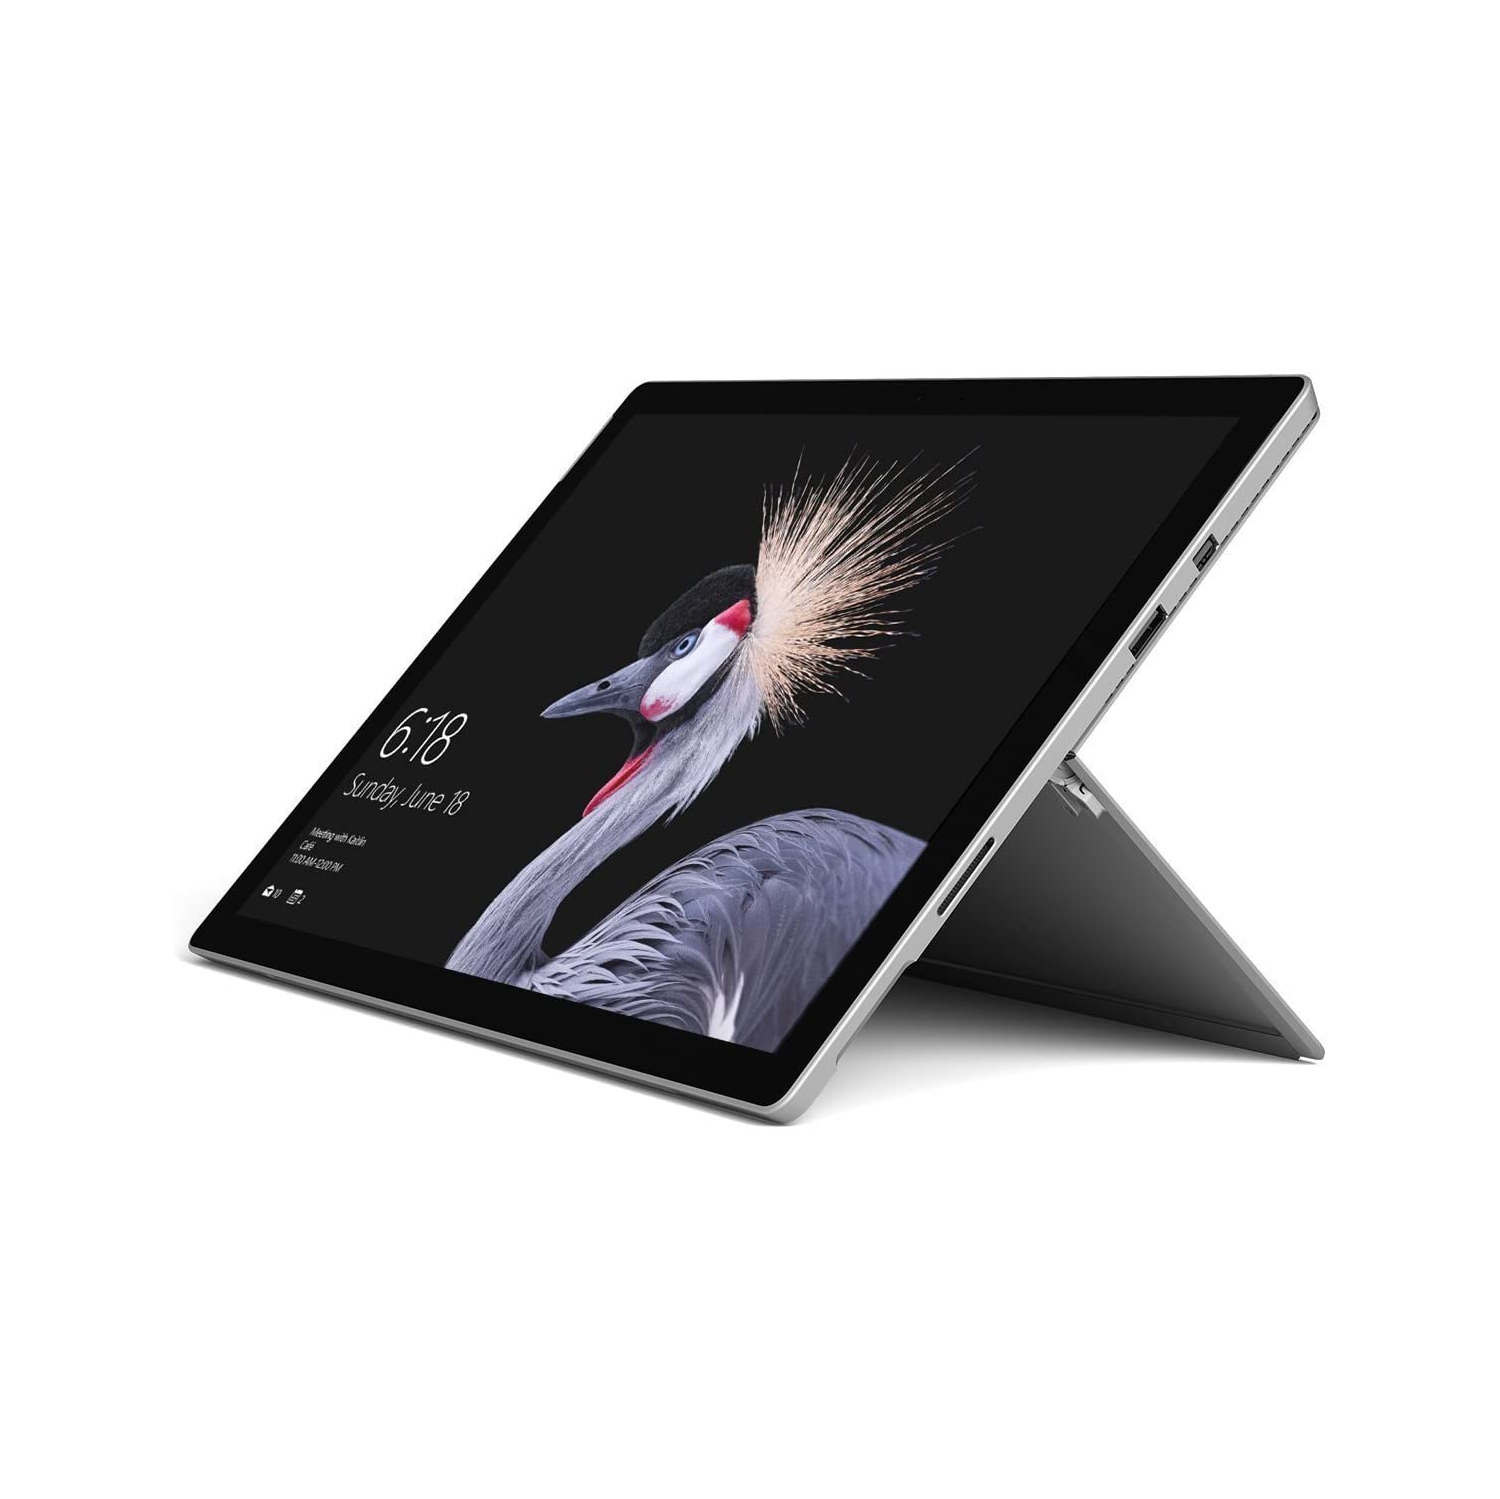 Refurbished (Excellent) - Microsoft Surface Pro 5 Intel i5-7300U